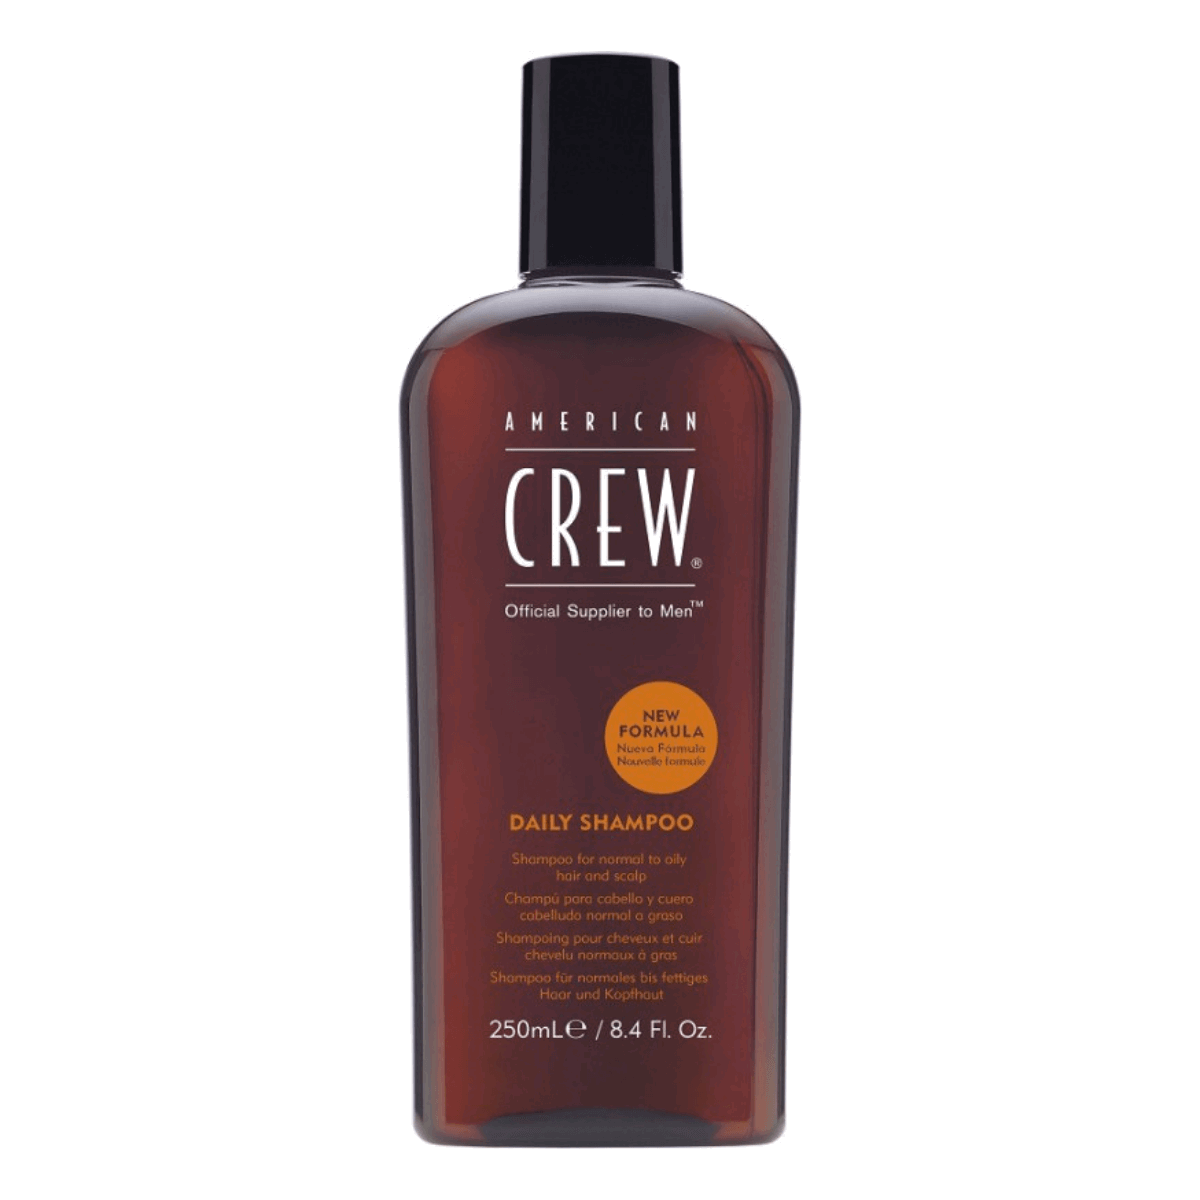 8: American Crew Daily Shampoo, 250 ml.